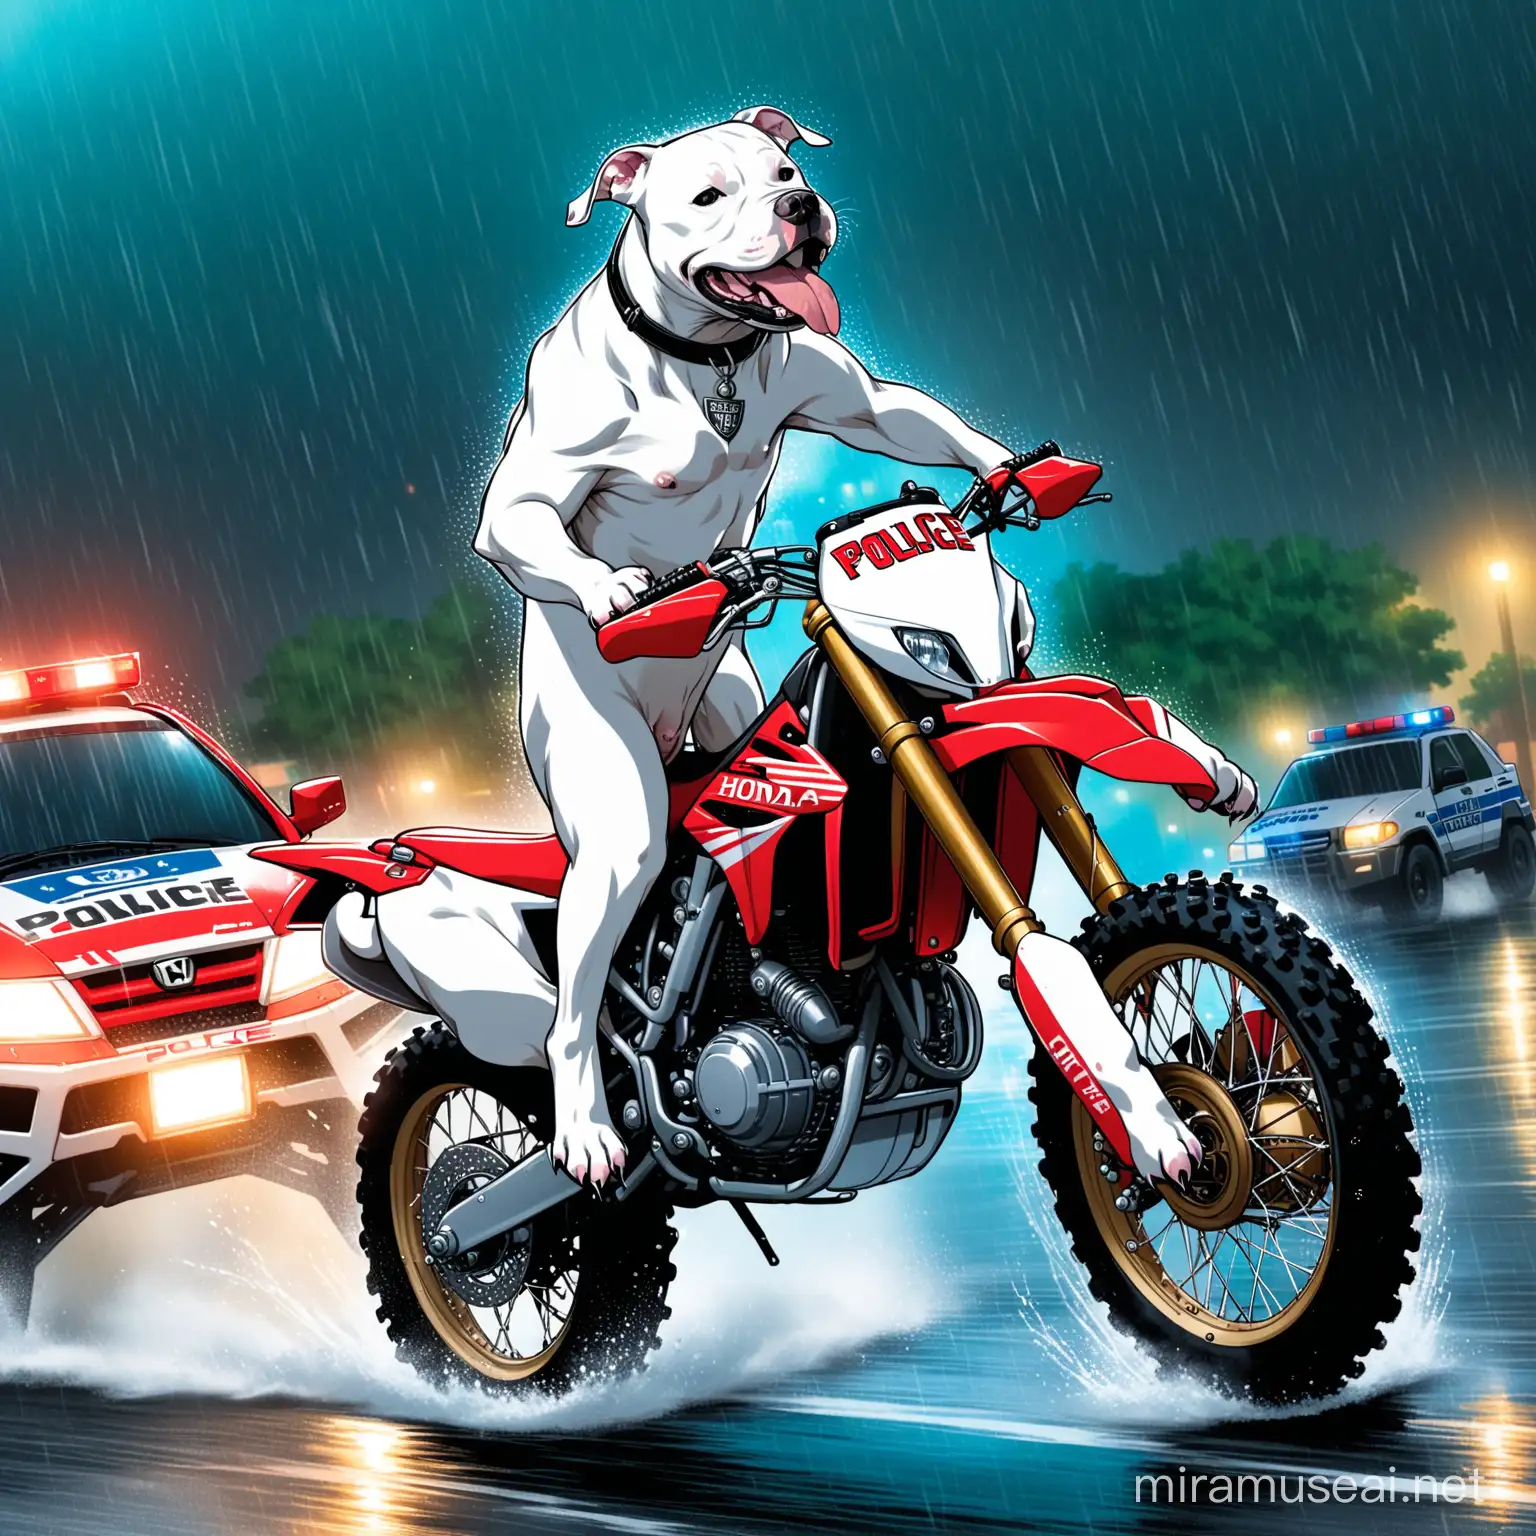 White Pitbull with HitlerLike Spot Riding Honda CRF450R in Rainy Street Chase